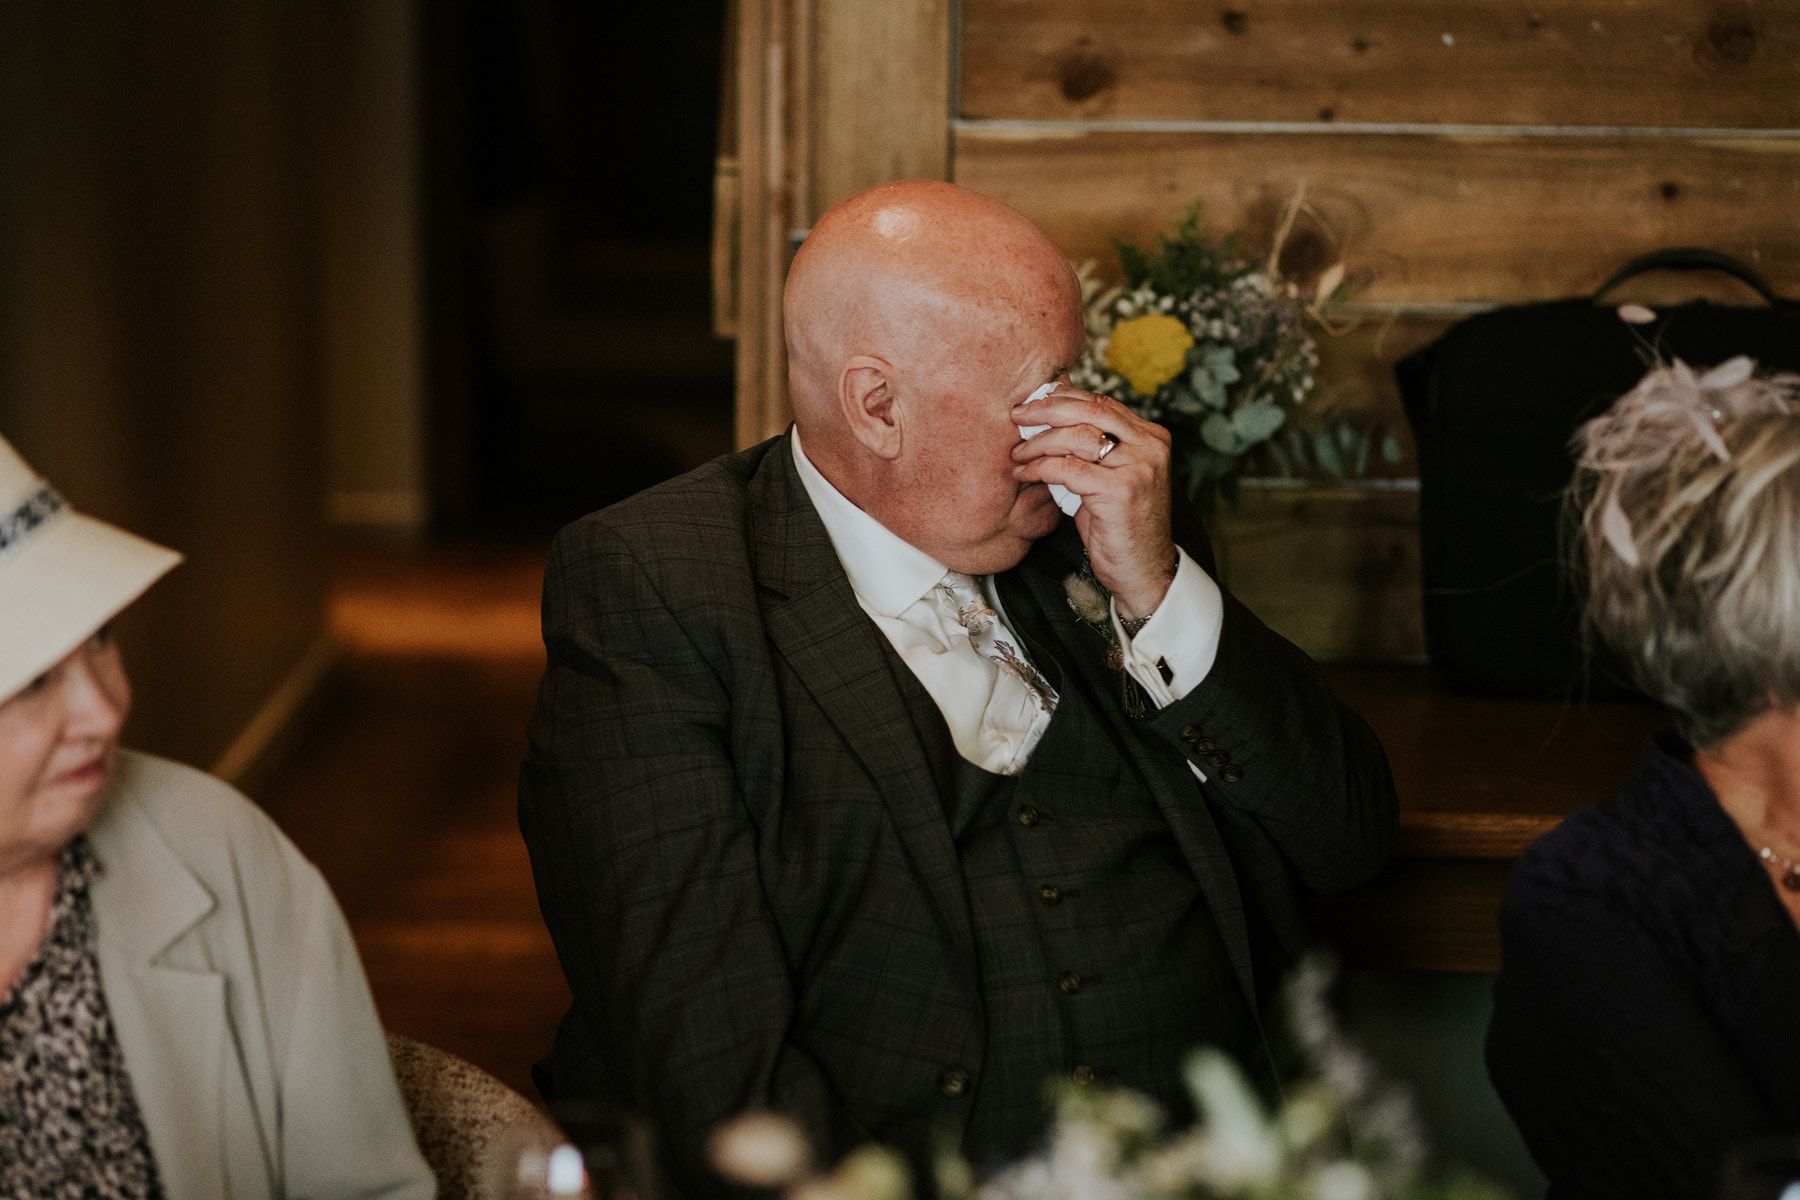 Emotional dad during wedding speeches